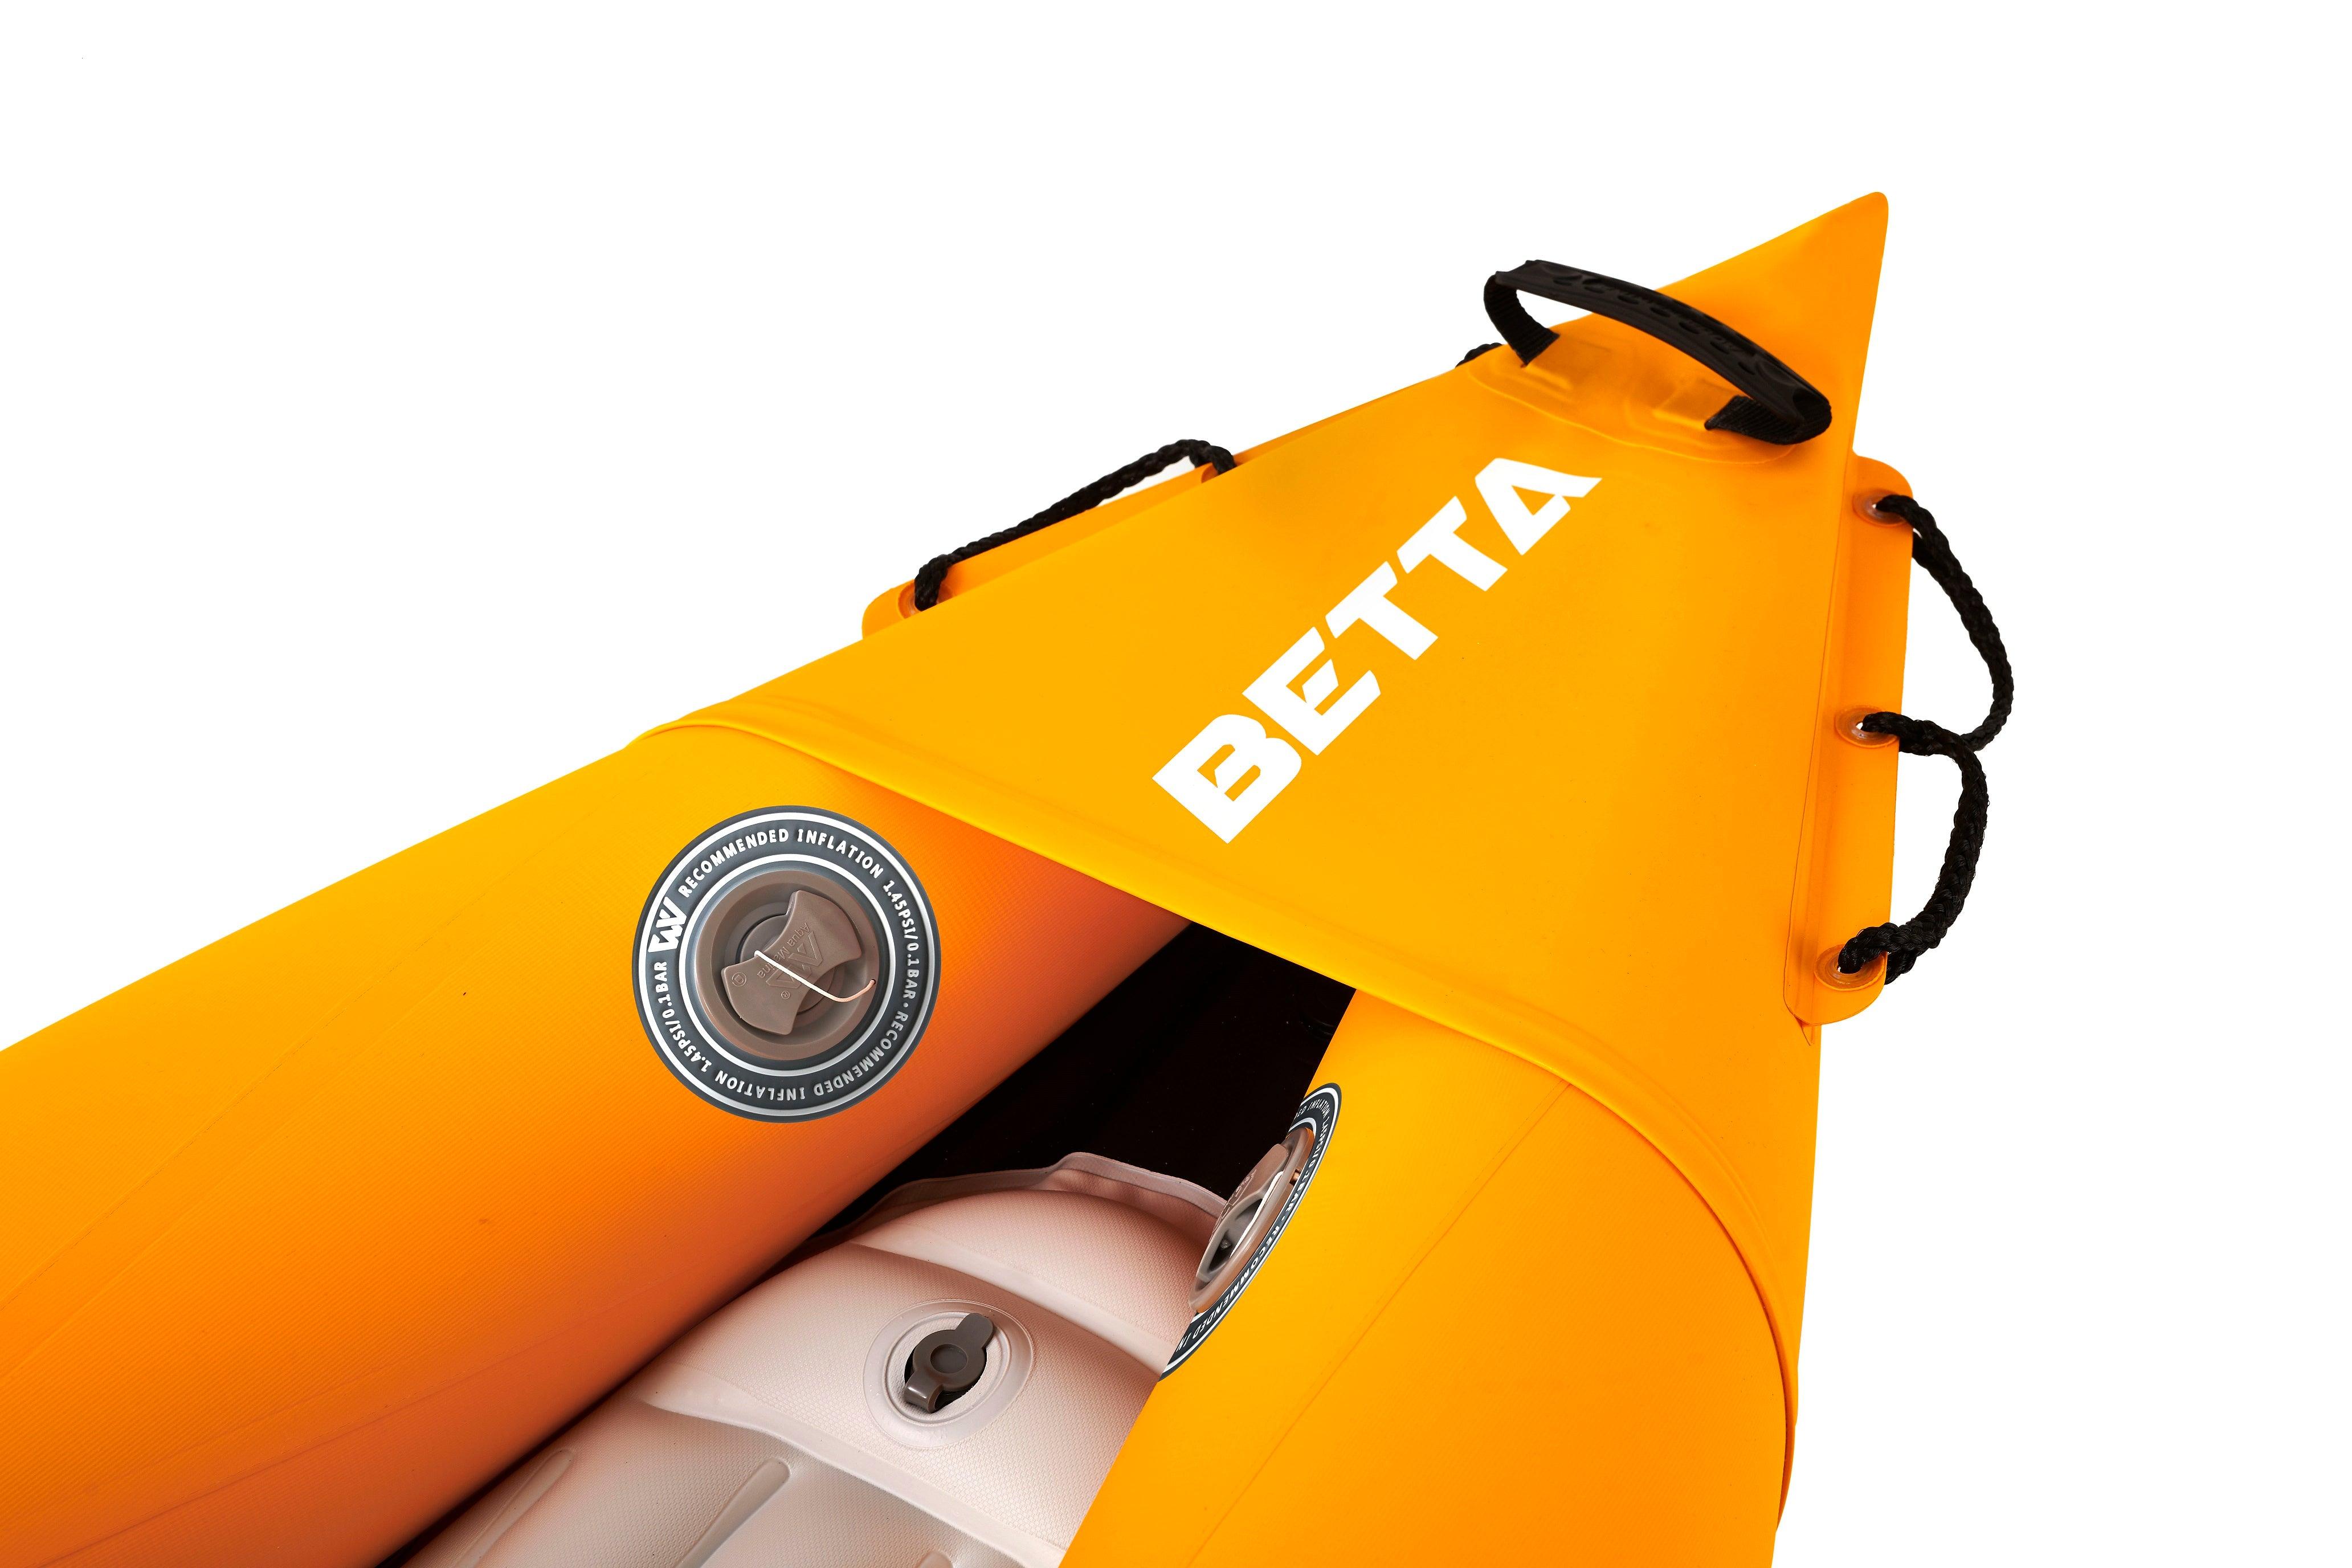 Betta 312 Leisure 1-Person Kayak - DTI Direct Canada